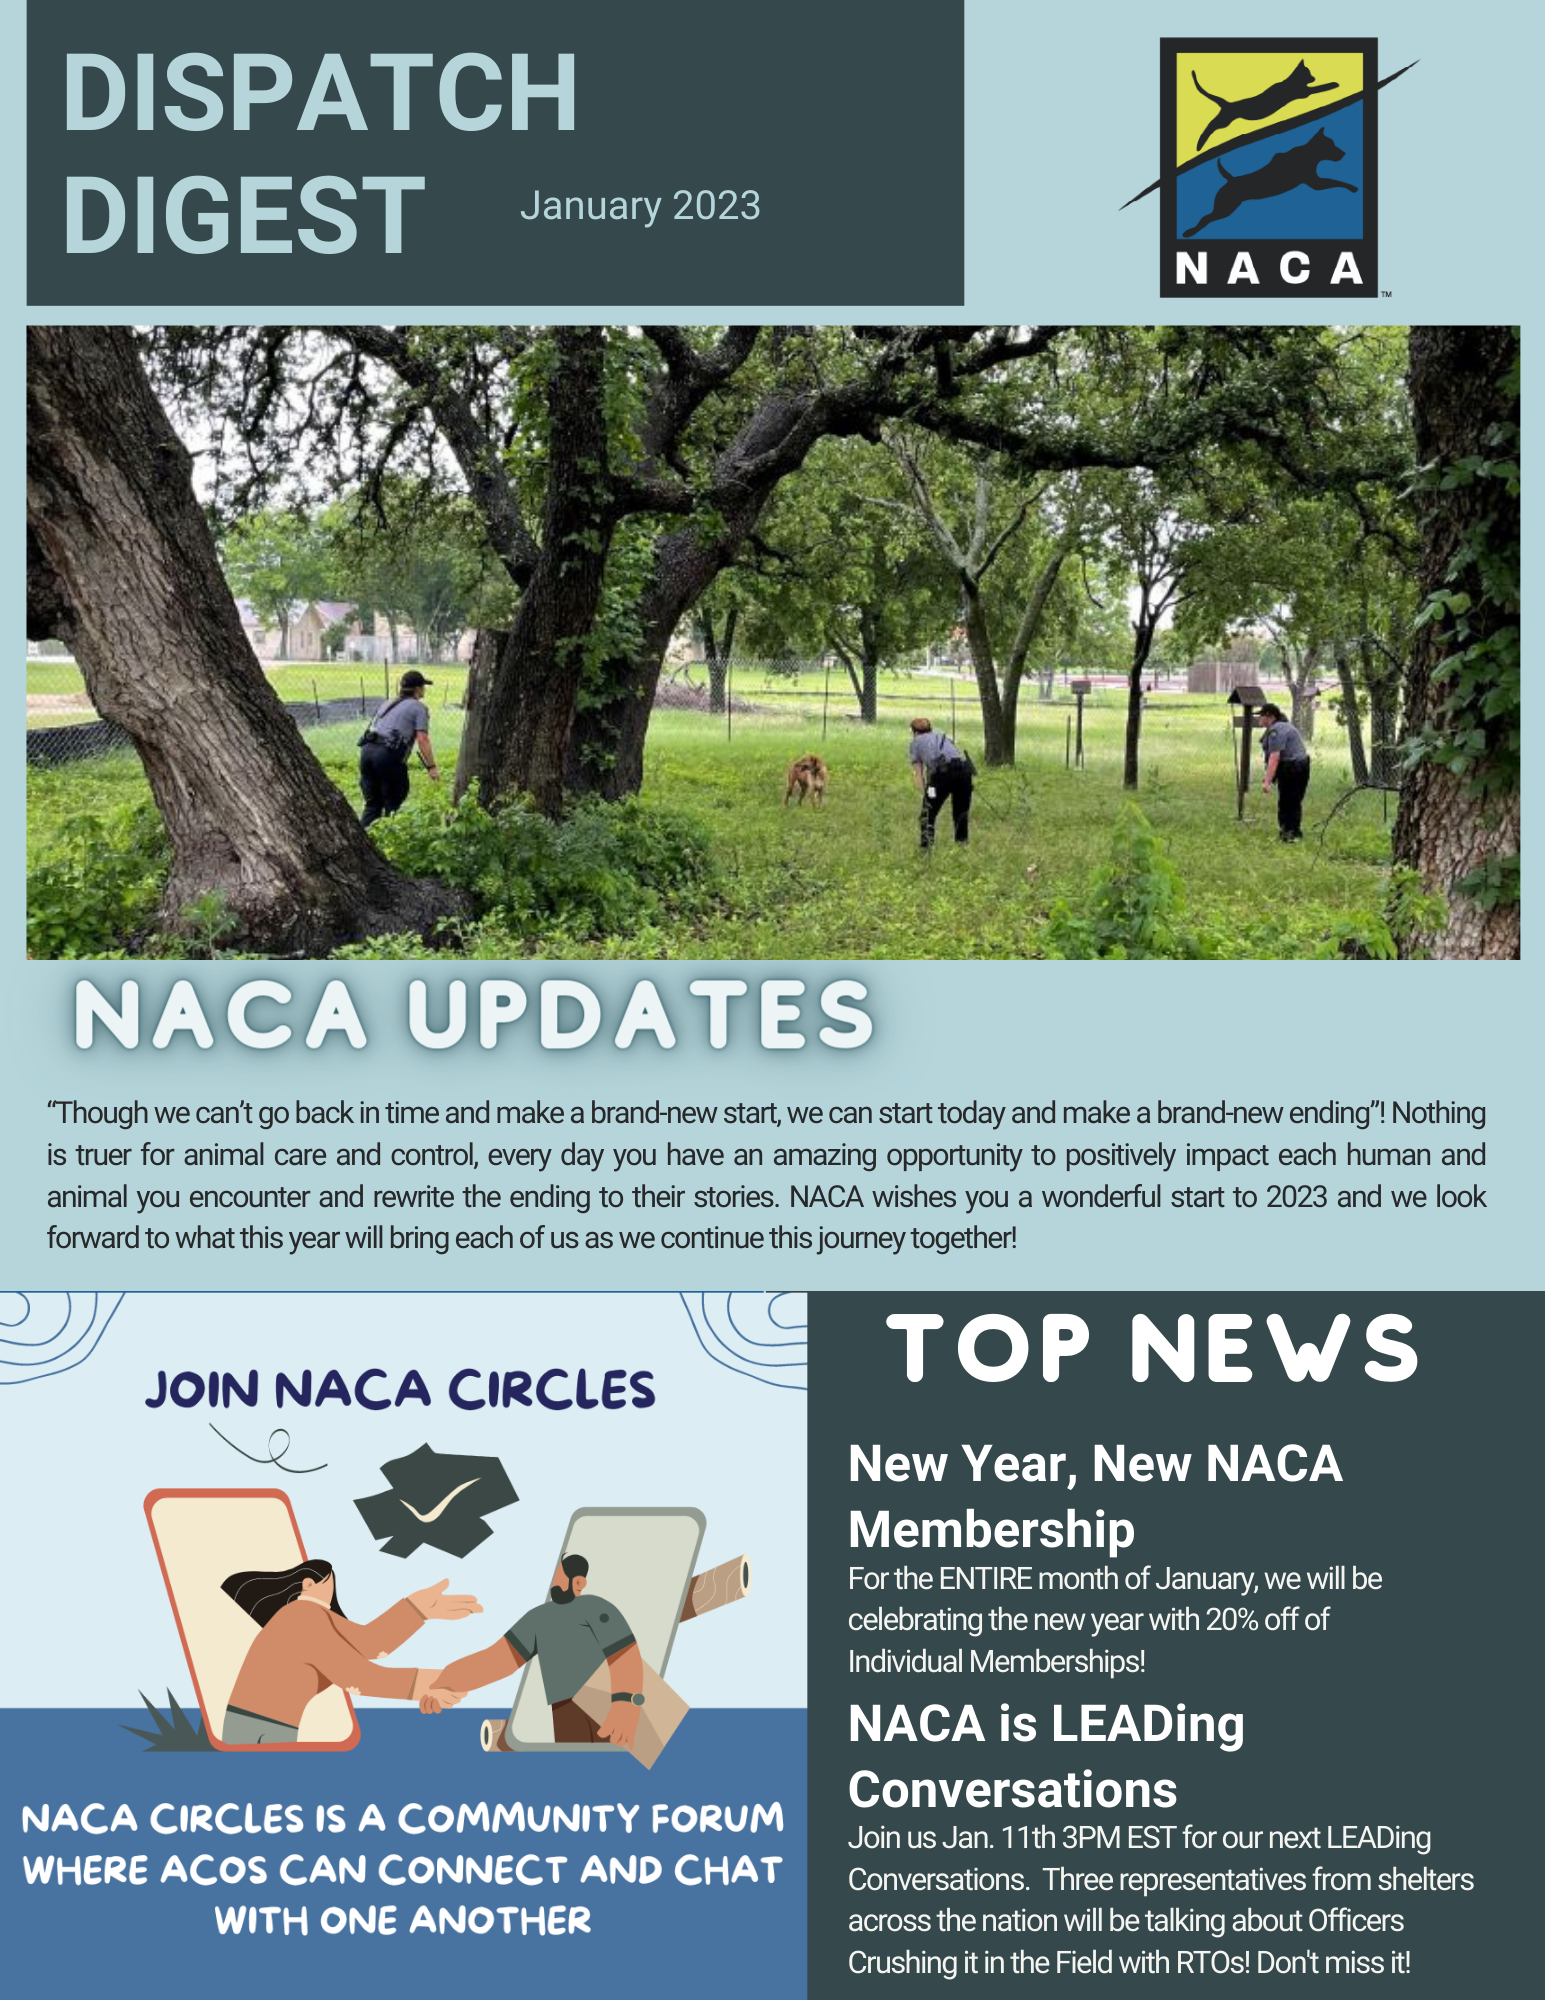 NACA Dispatch Digest - January 2023 Updates & News